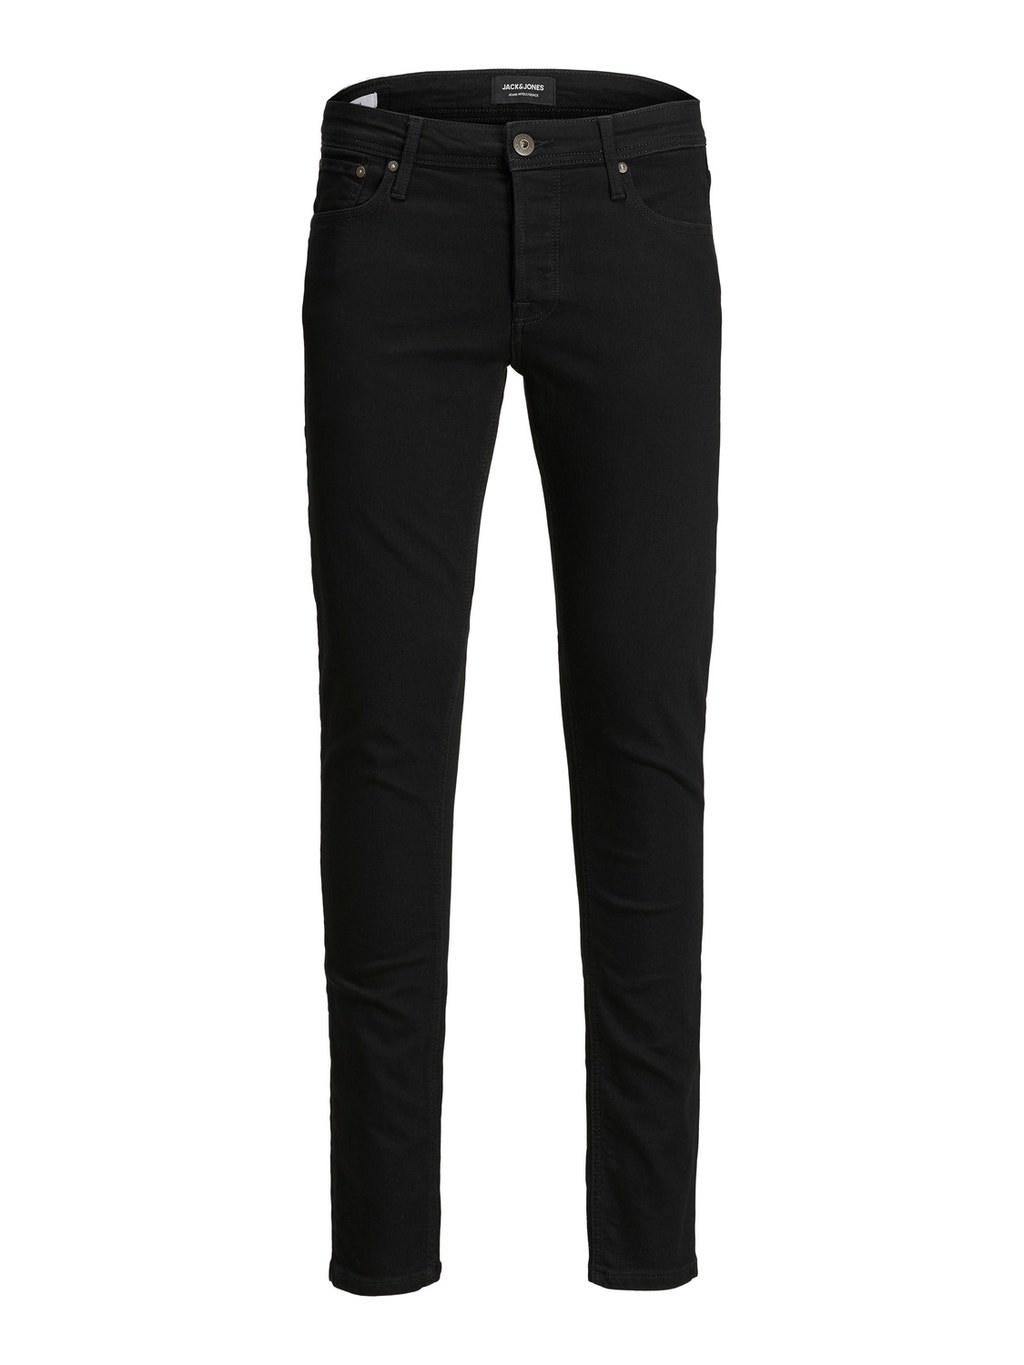 GLENN ORIGINAL AM 816 Jeans slim fit | Black | Jack Jones®